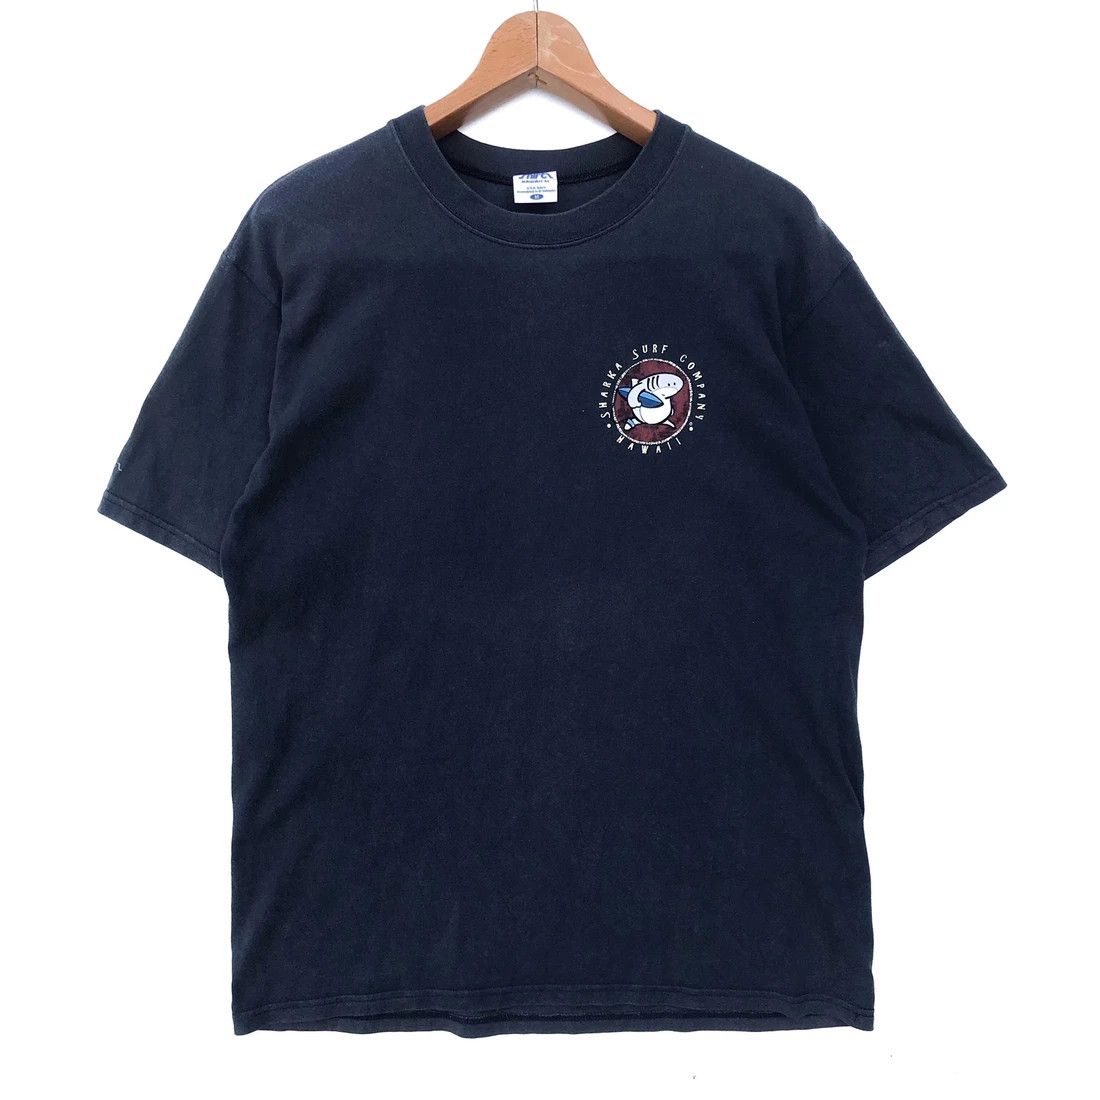 Crazy Shirts Crazy Shirt Sharka Surf Co Blue Hawaii Size US M / EU 48-50 / 2 - 2 Preview